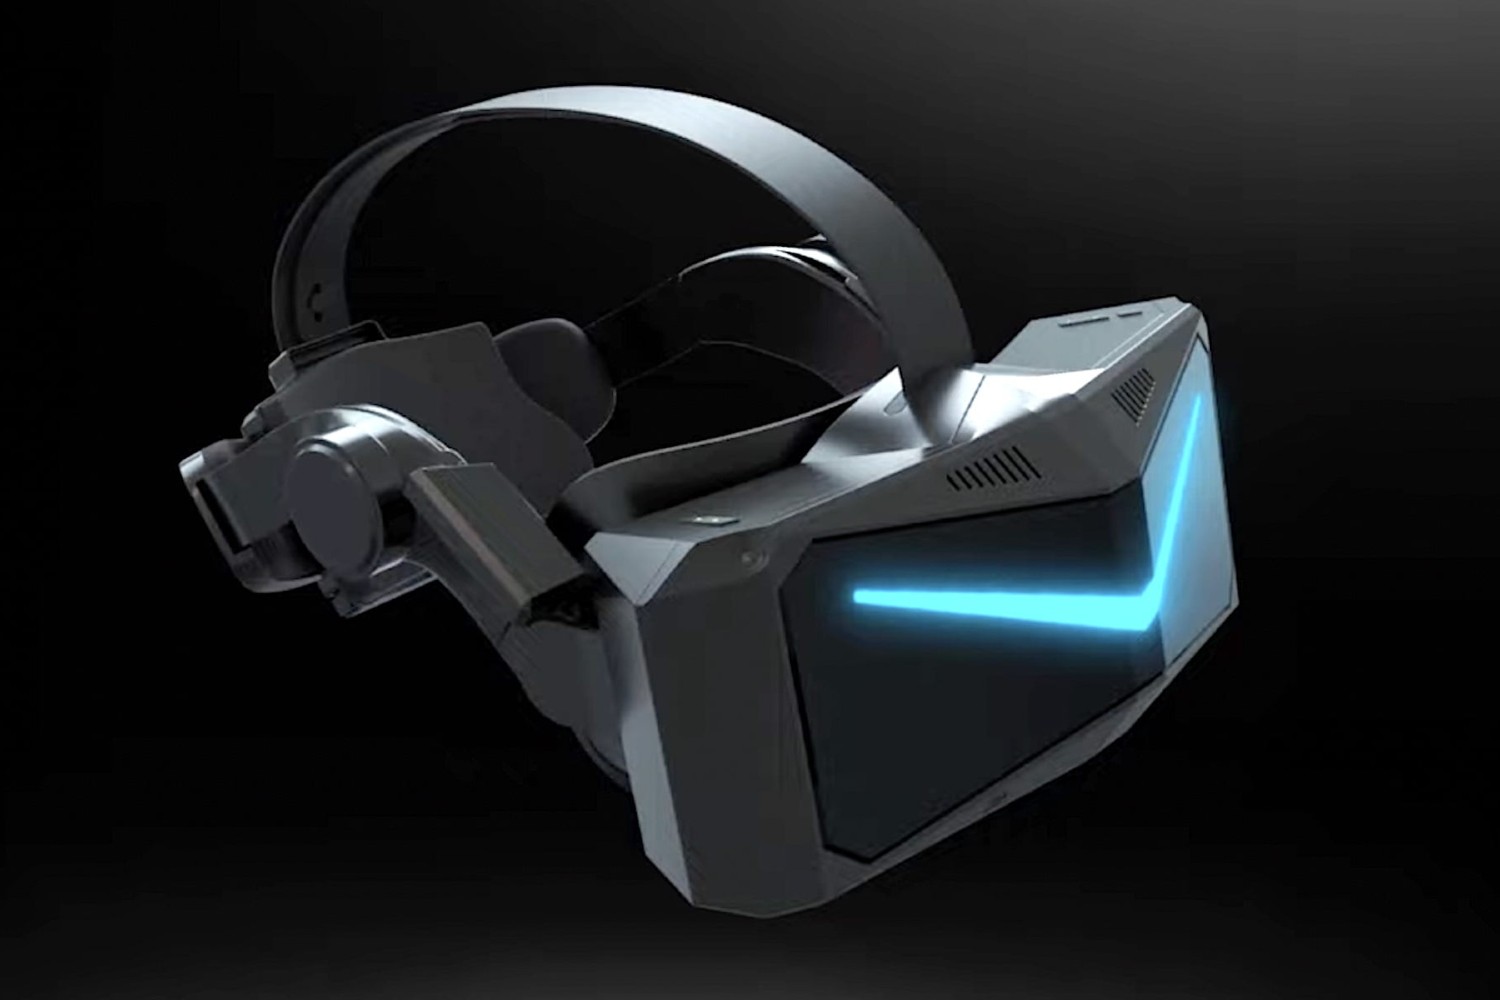 Pimax Crystal VR headset on black background.